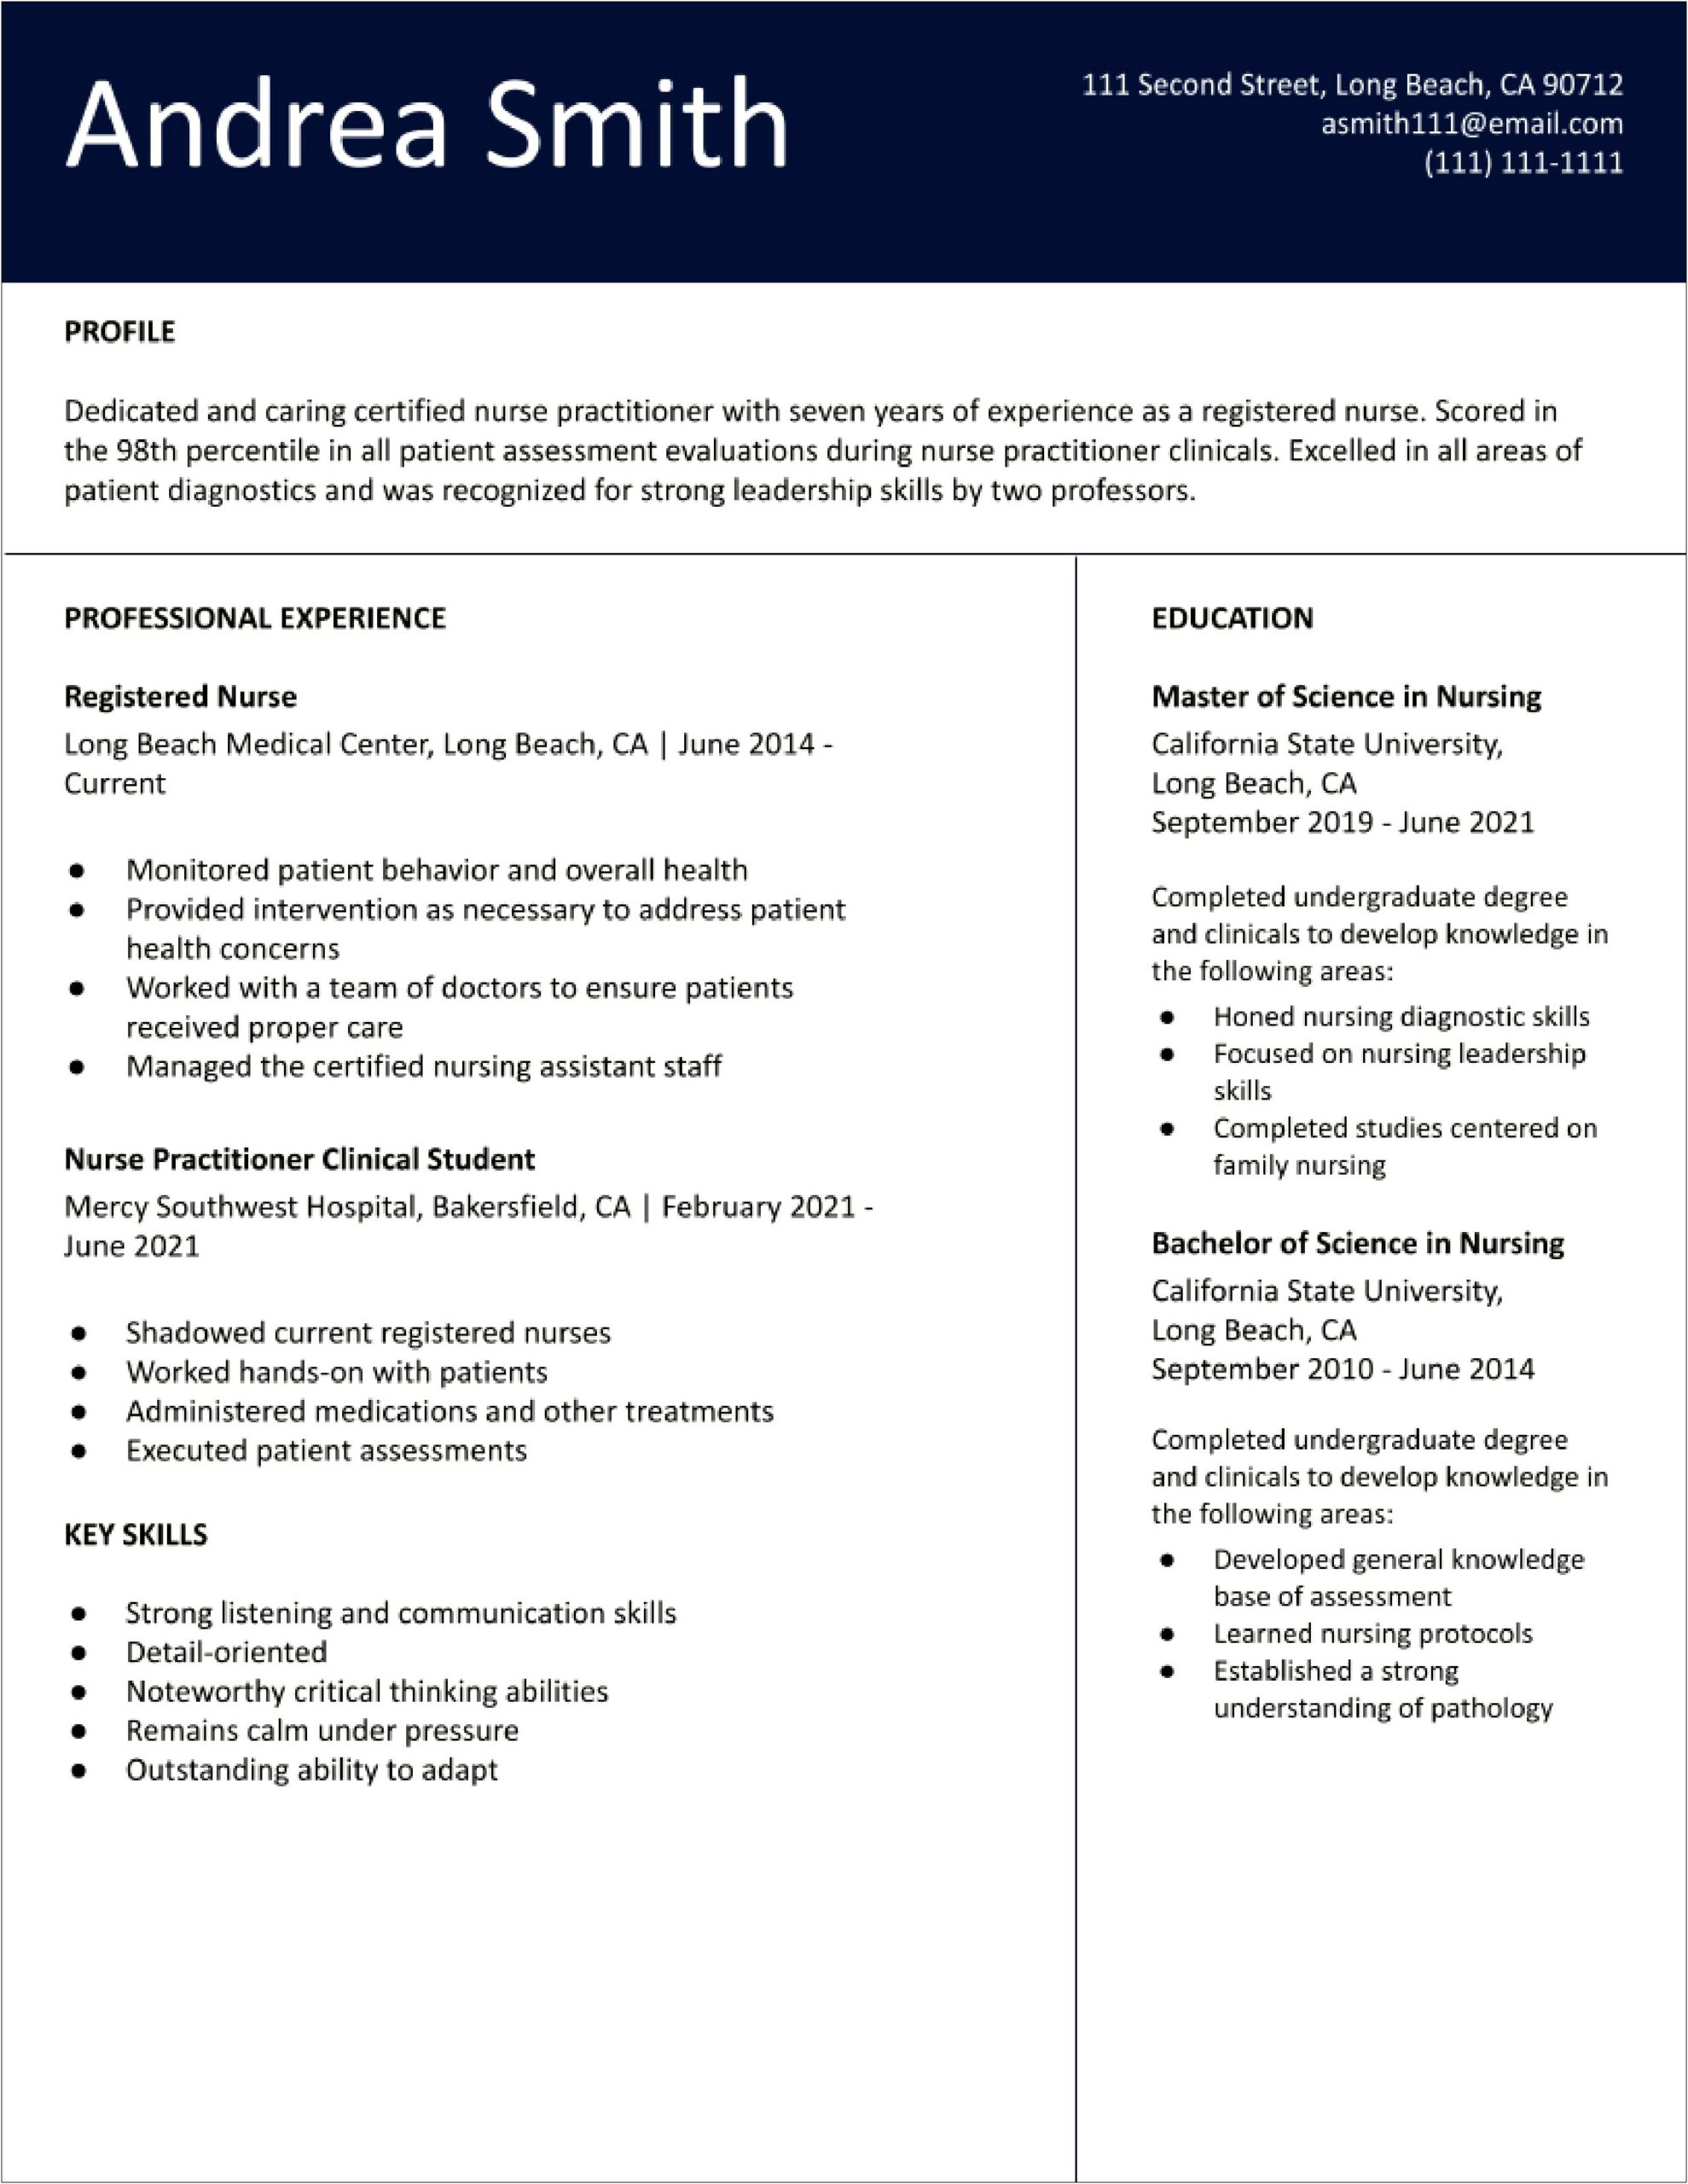 Resume Profile Summary Of Family Nurse Practitioner